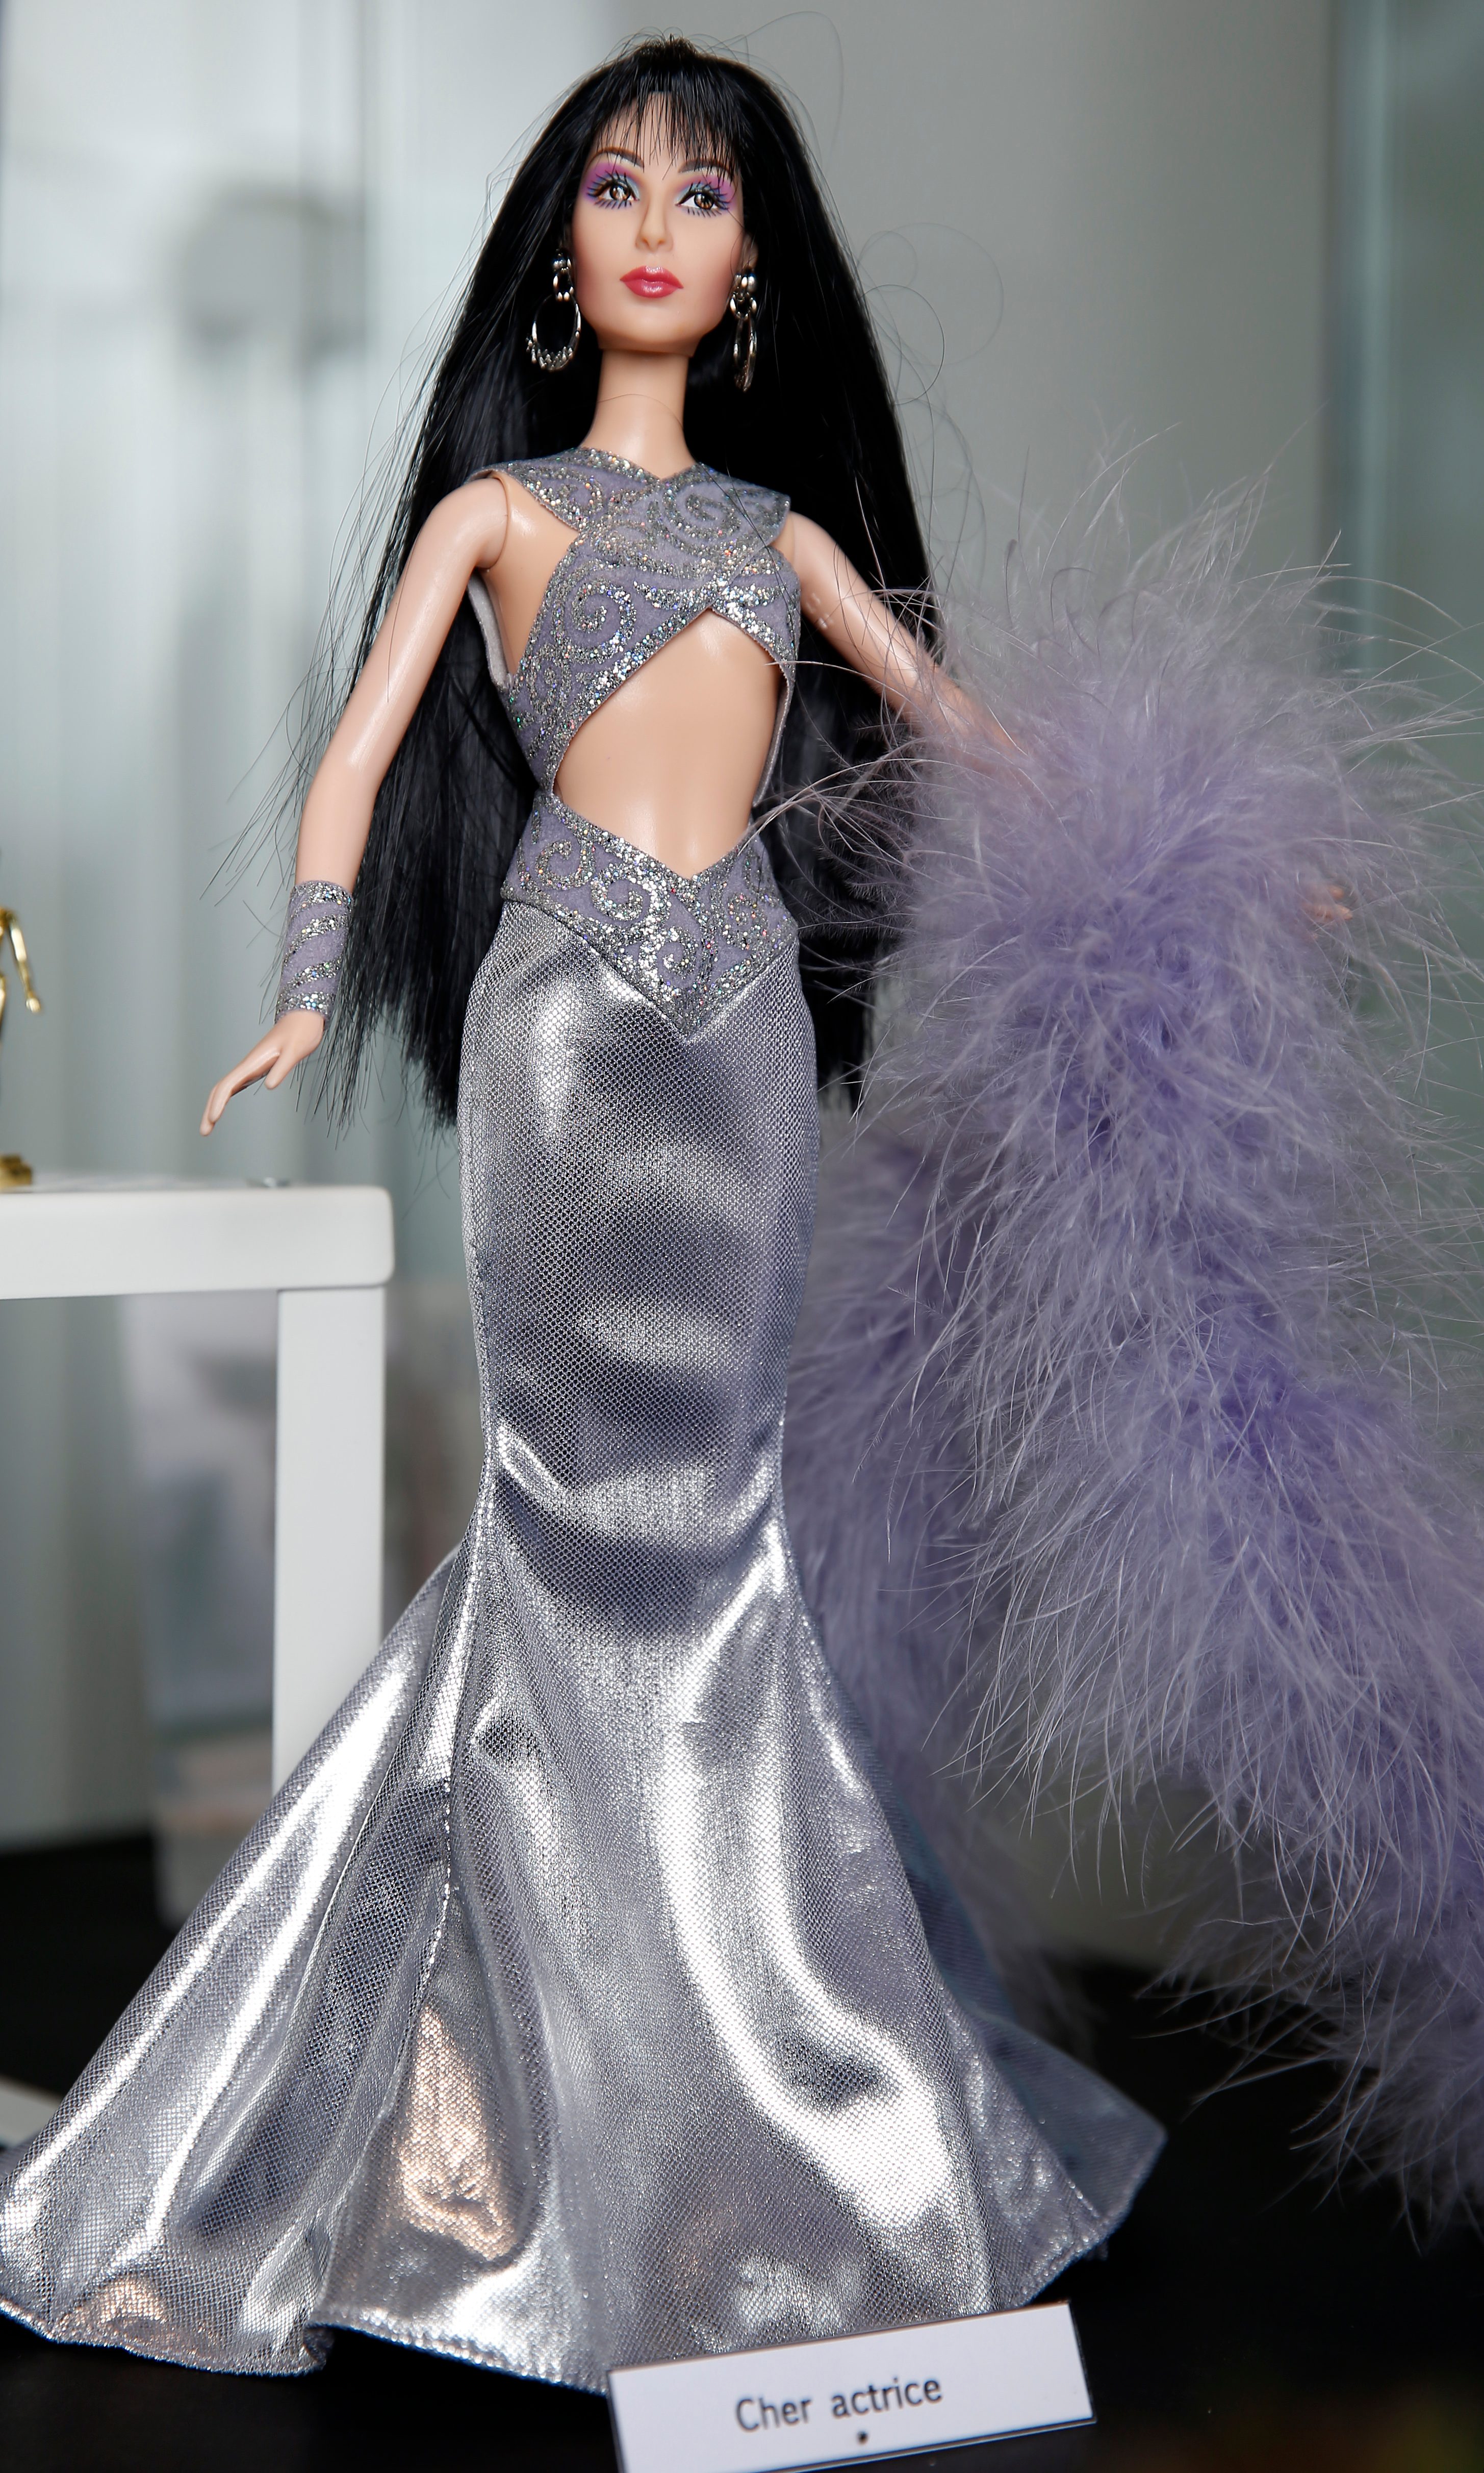 Keresked Be Gyaz Temp Barbie Famous Dolls Cher Sz Rke Tuberkul Zis